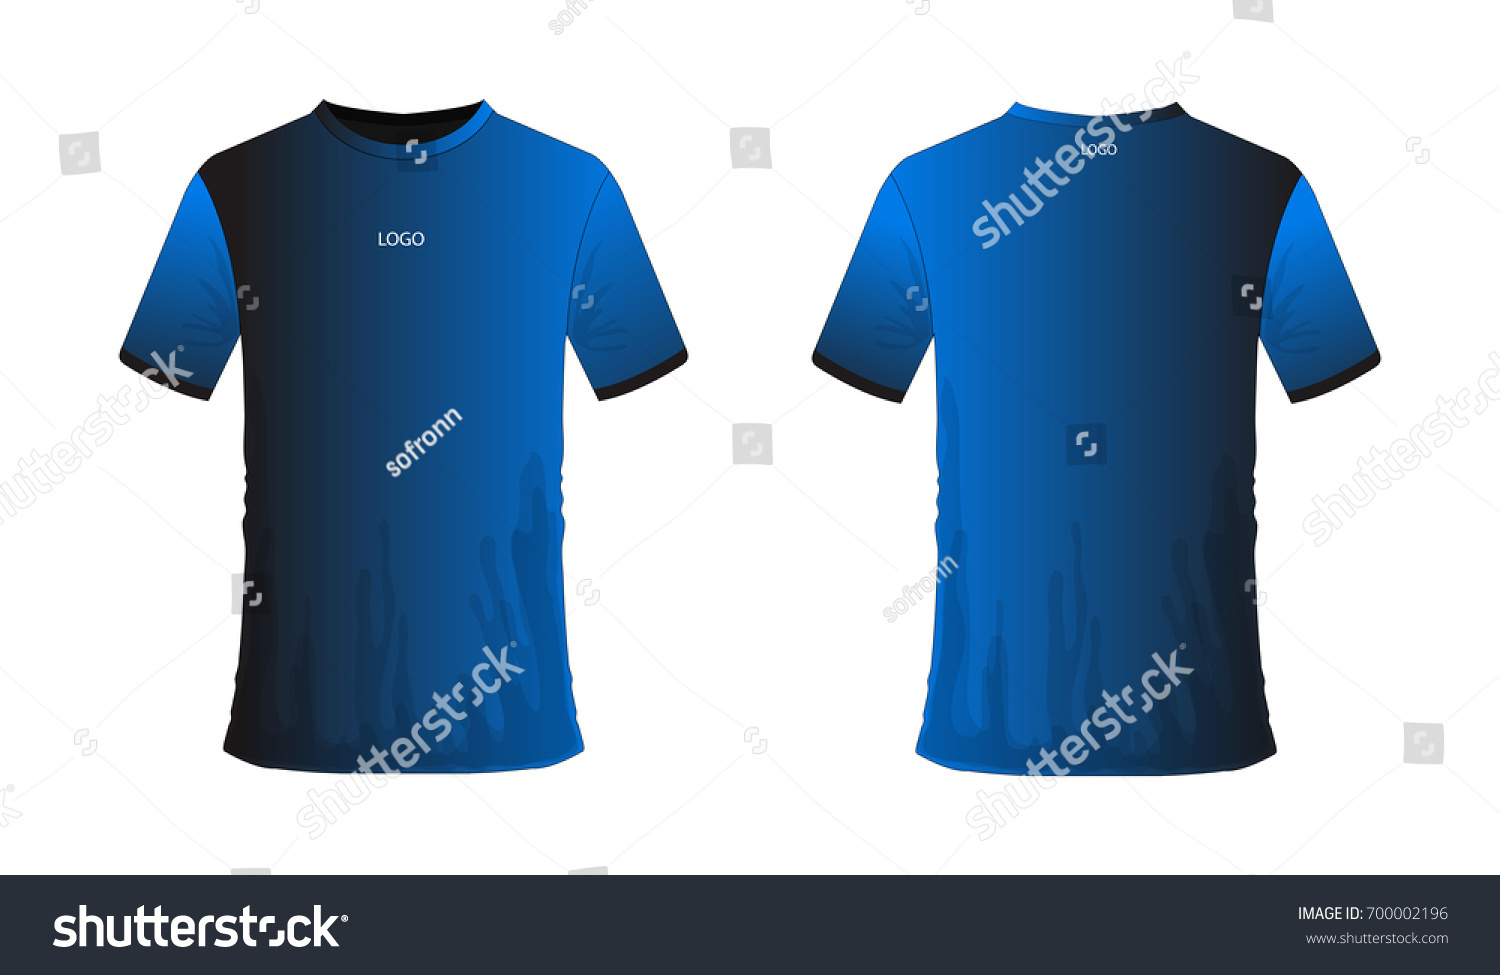 Download Tshirt Blue Black Soccer Football Template Stock Vector ...